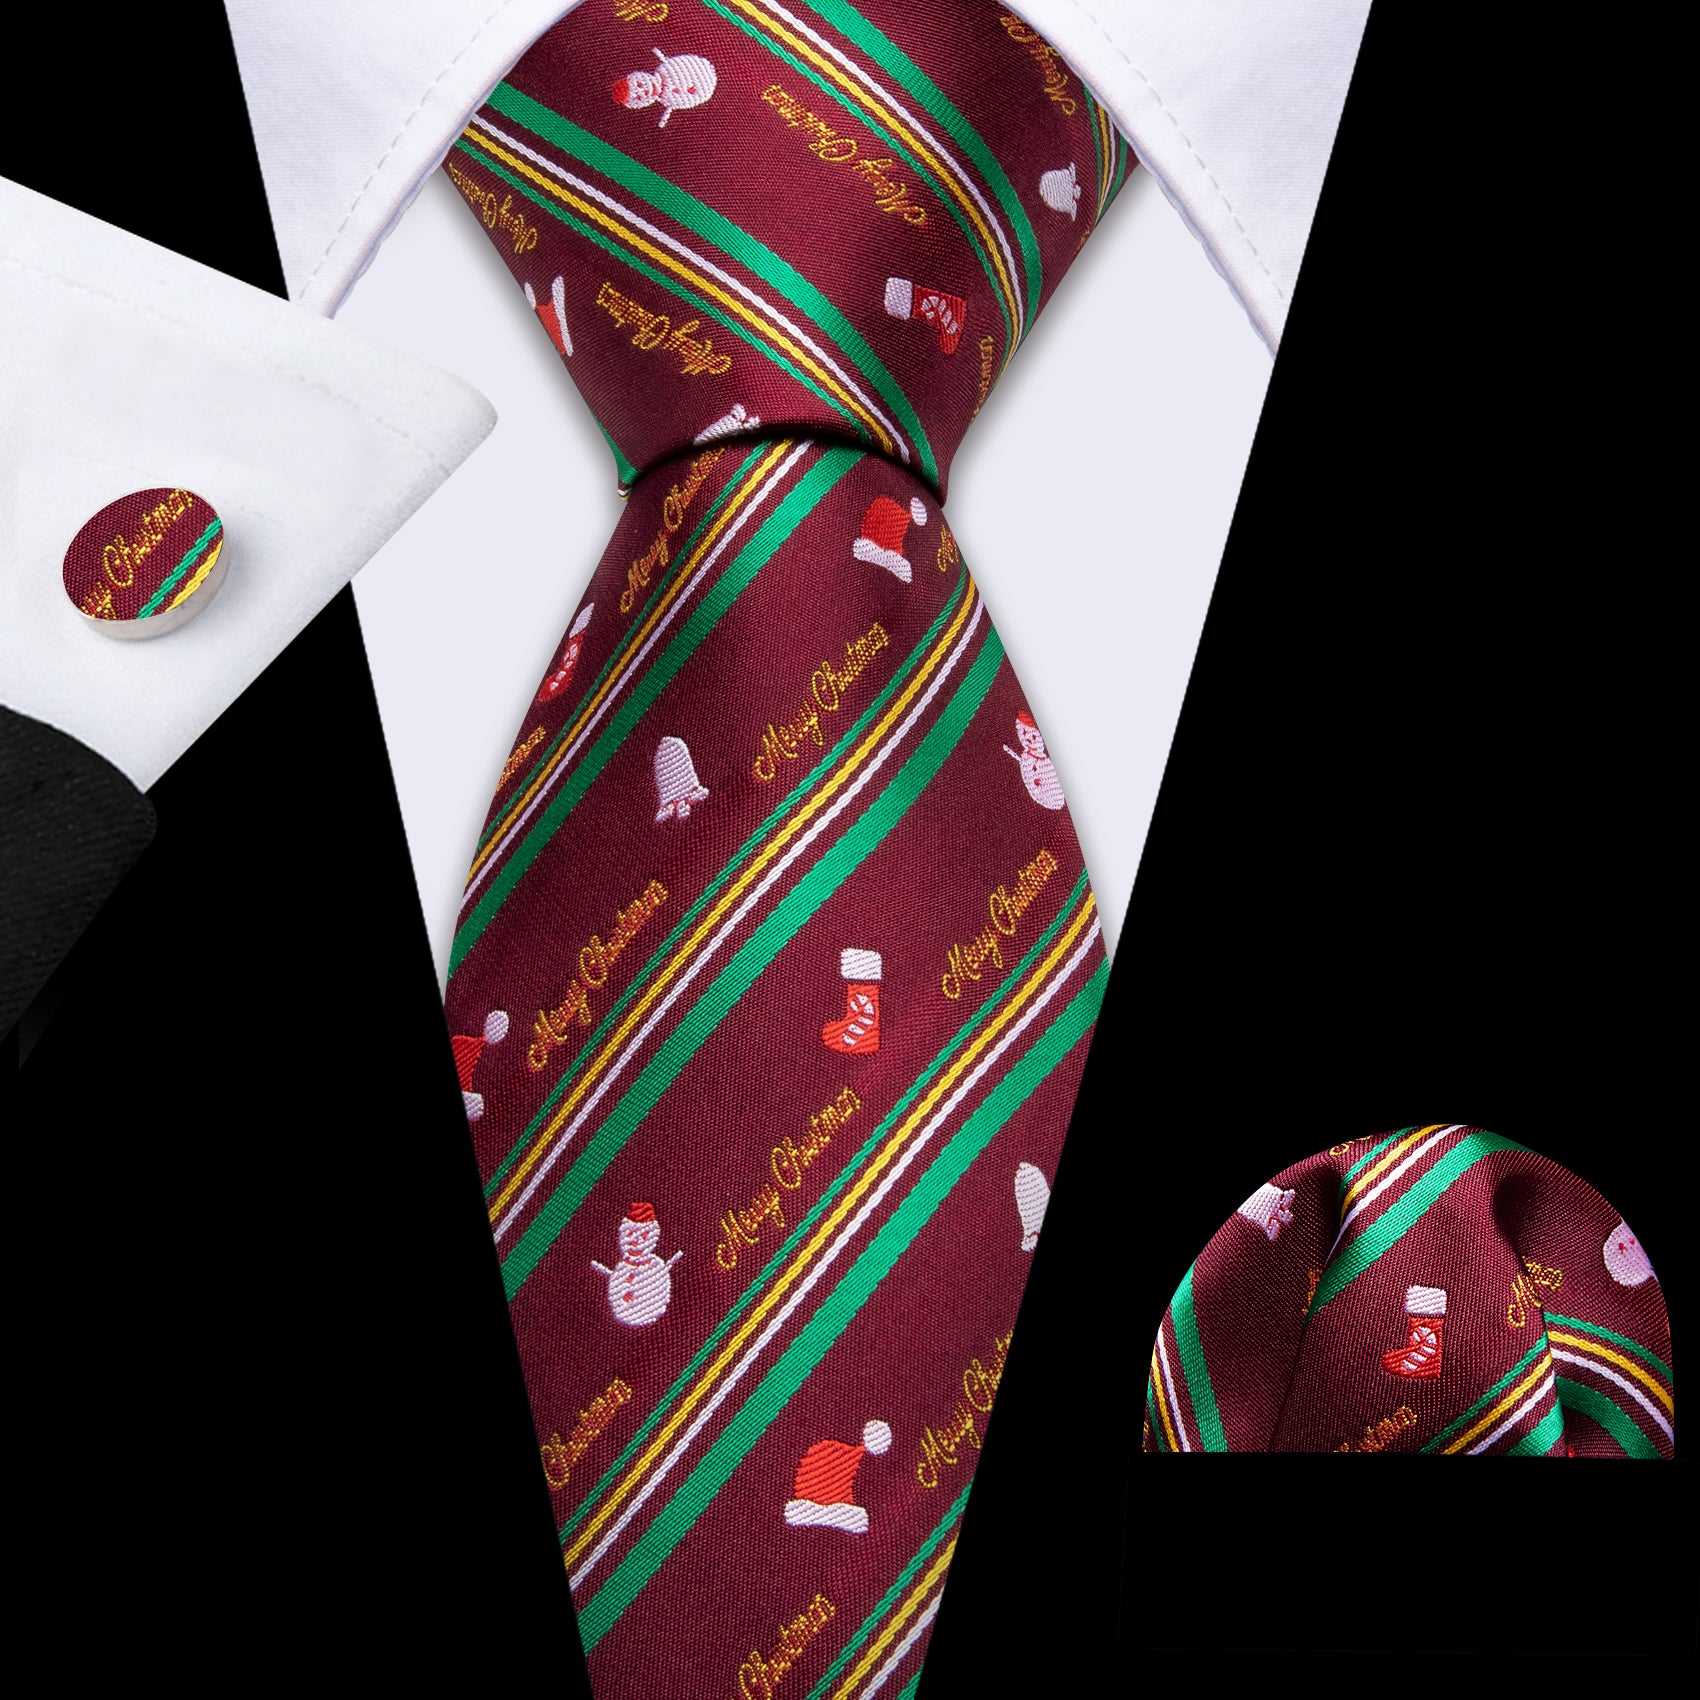  Christmas Tie Claret Xmas Santa Claus Pattern Men's Tie